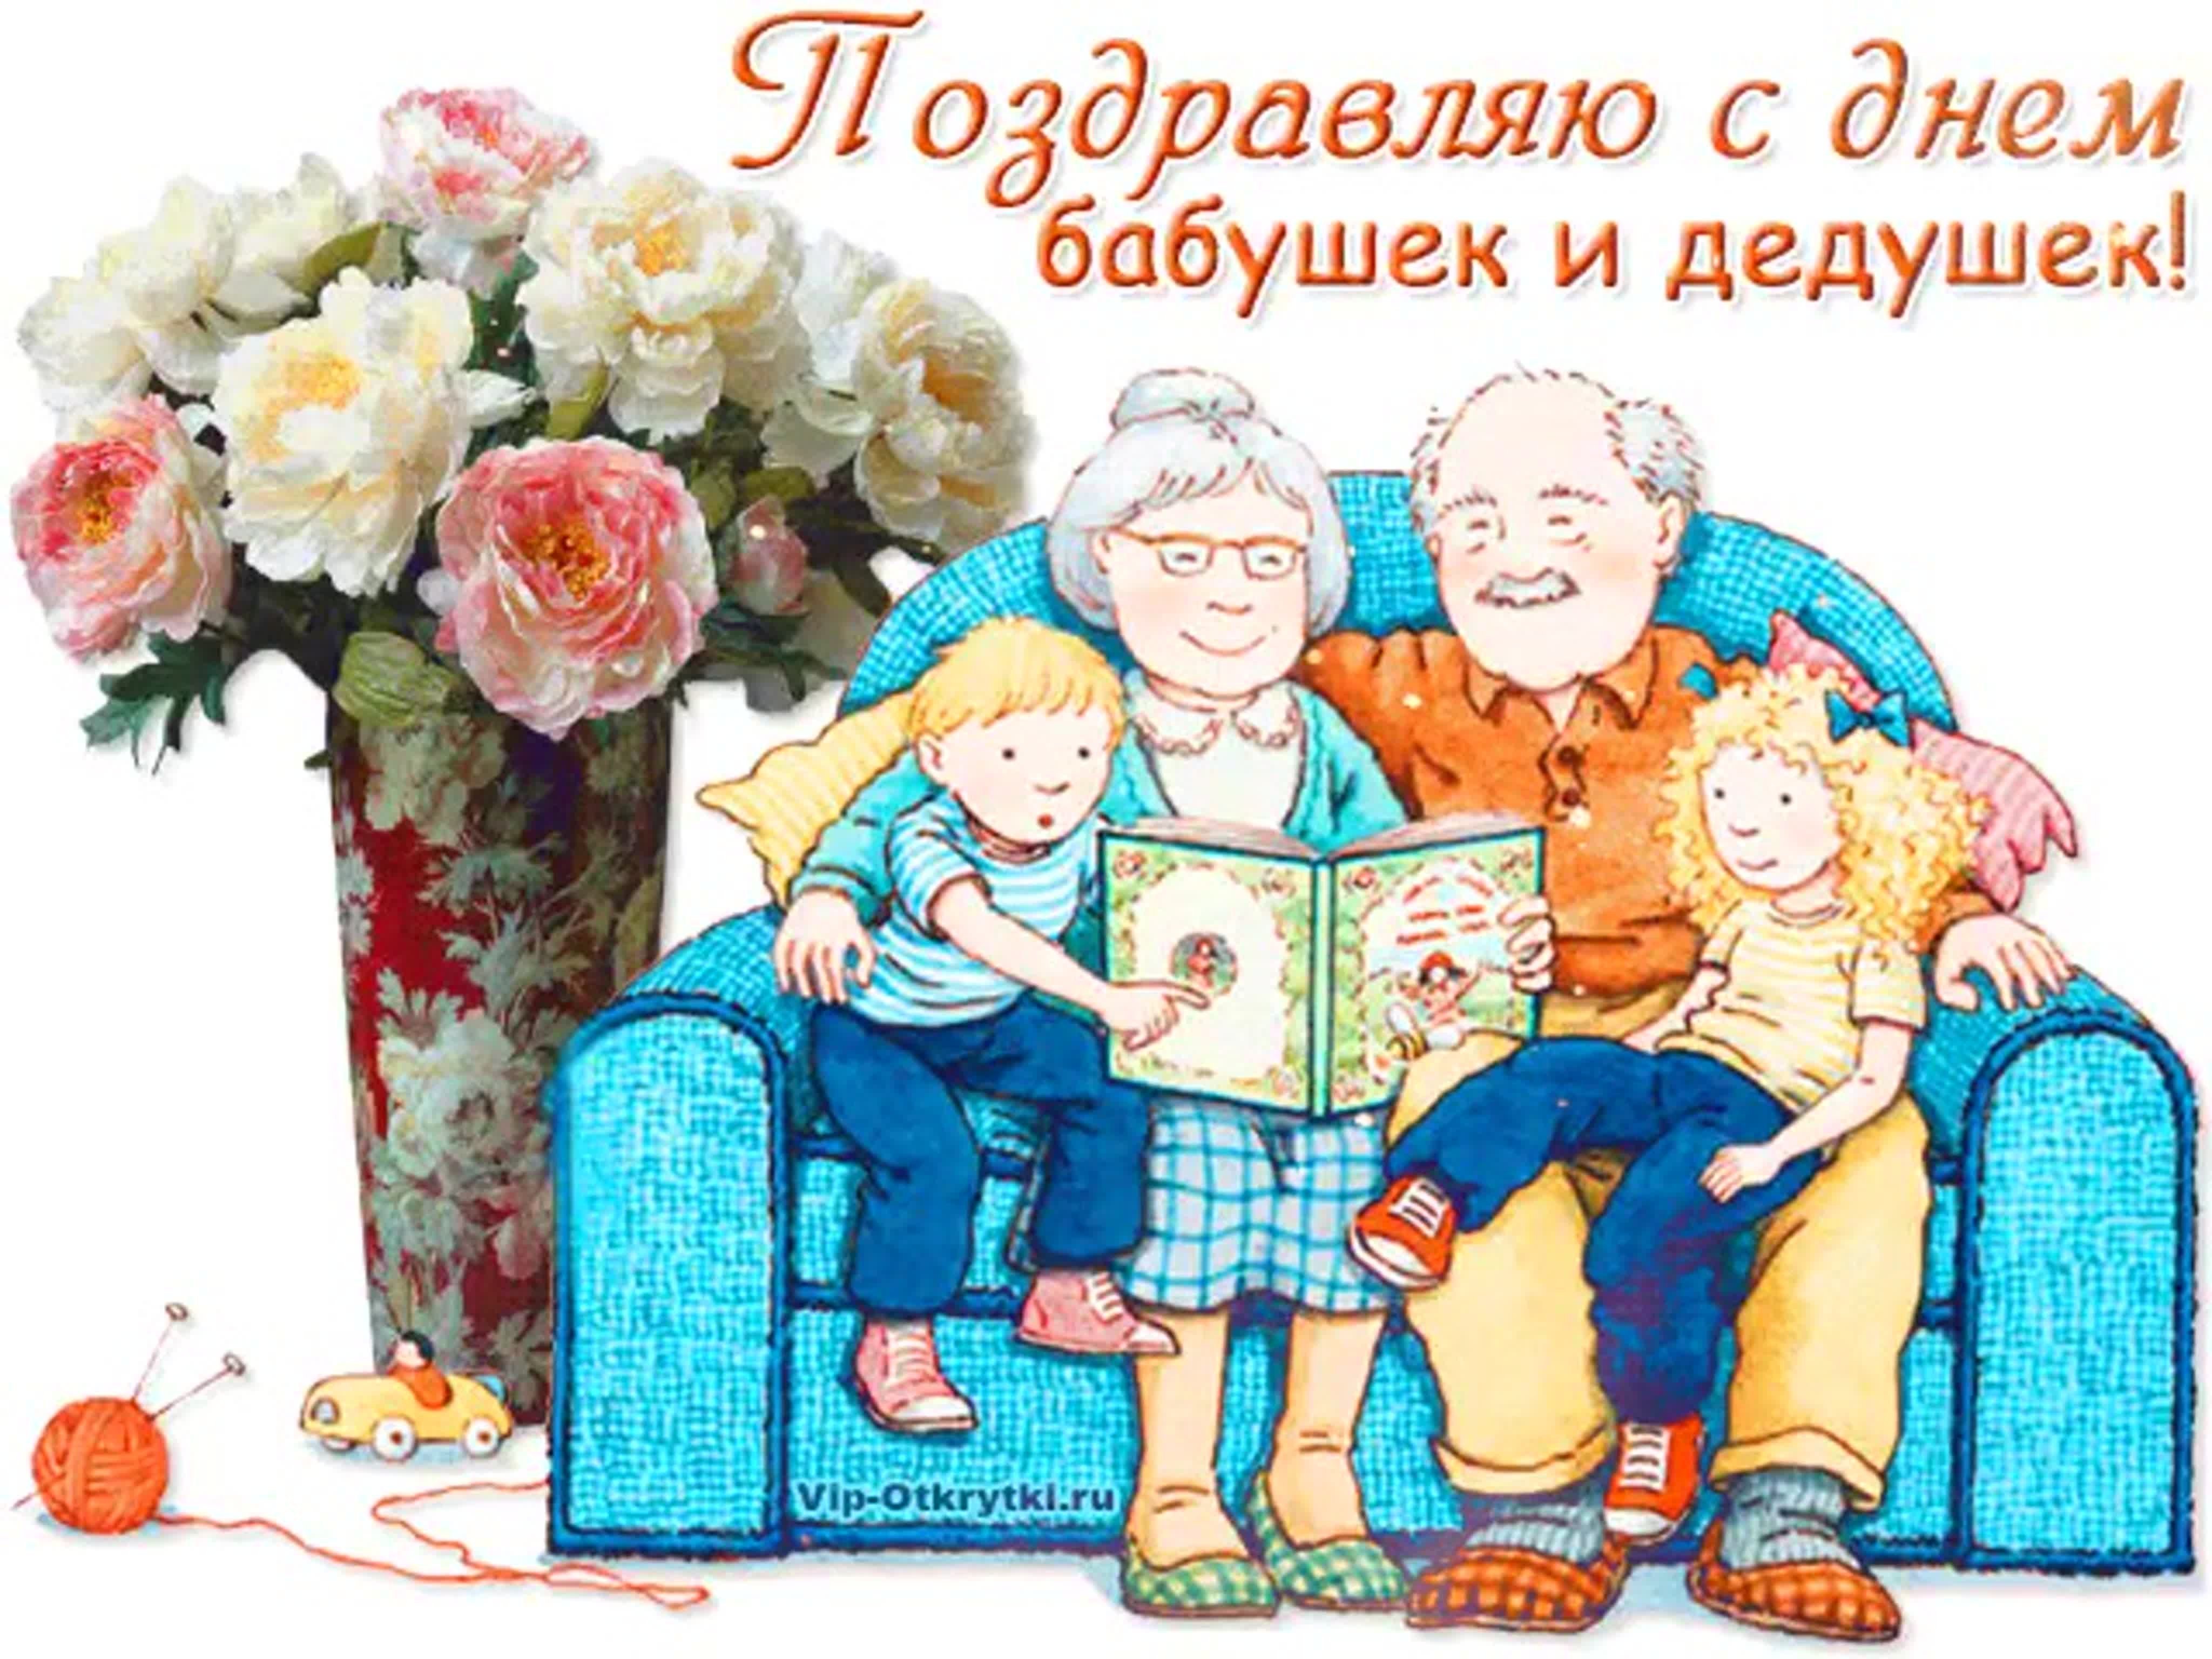 Международный день бабушек картинки. С днём бабушек и дедушек. С днём бабушек и дедушек открытки. С днем ьабушек идедушек. Открытка для бабушки и дедушки.